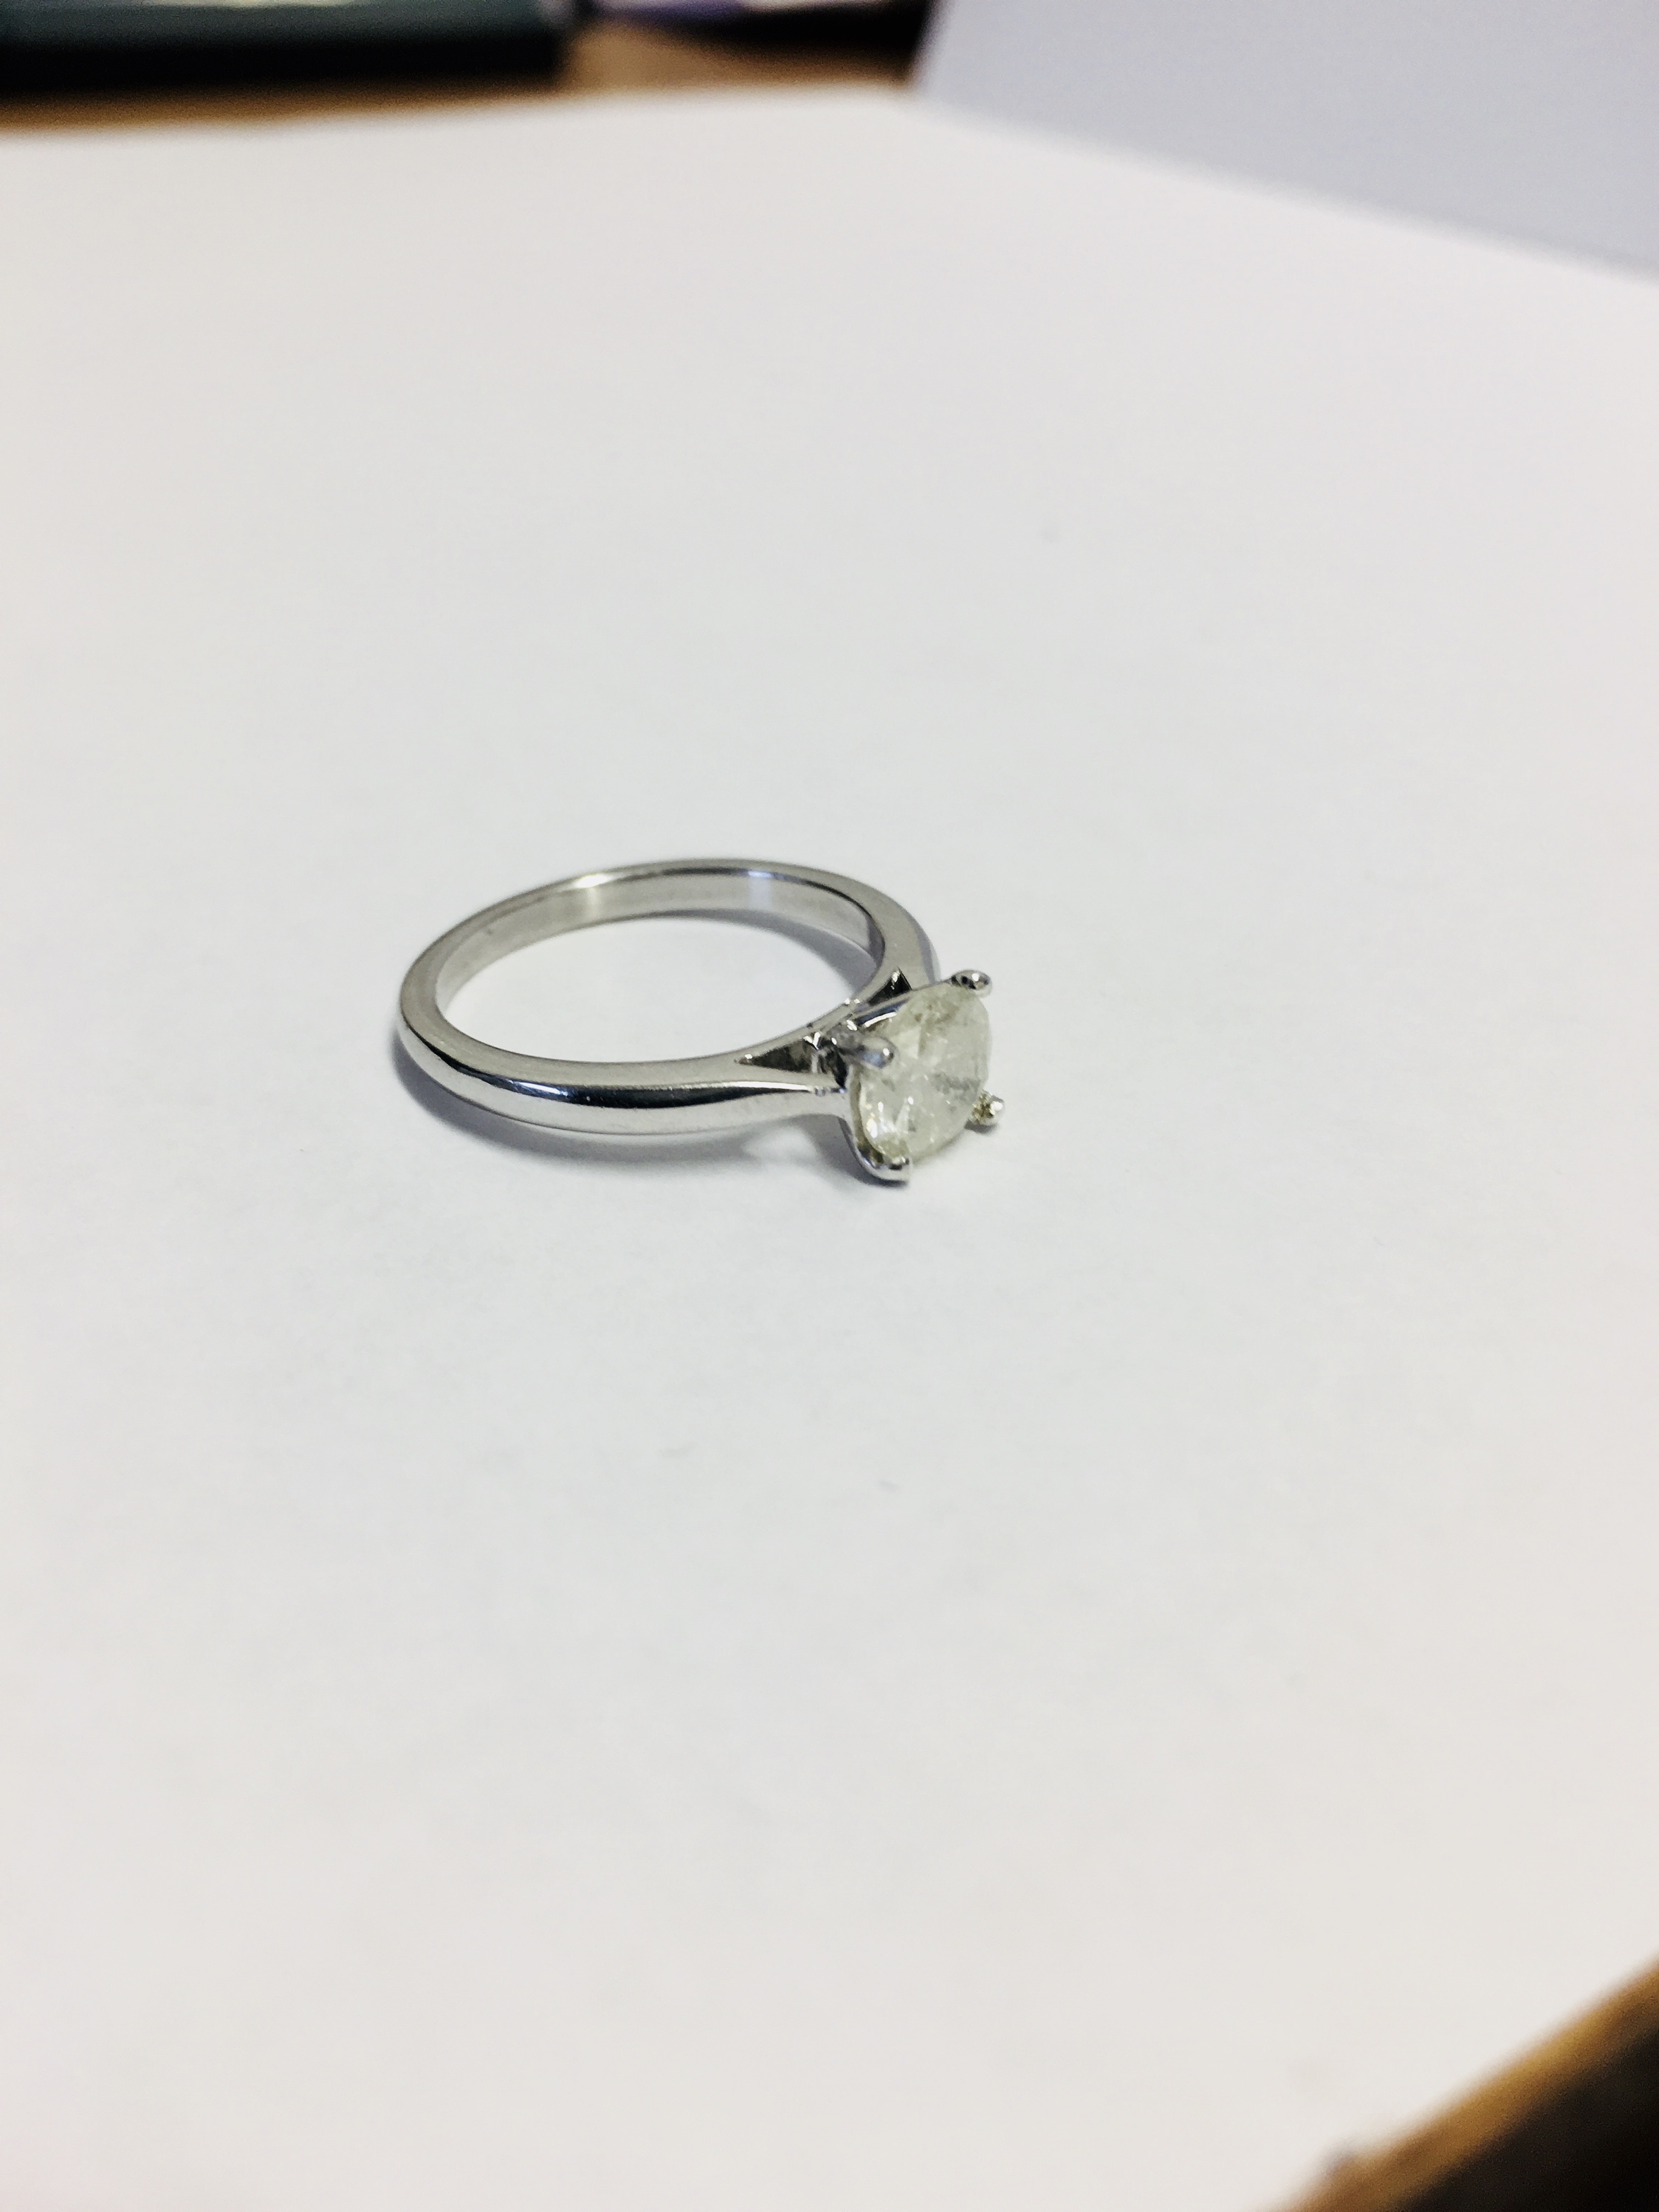 1Ct Brilliant Cut Diamond Solitaire Ring, - Image 4 of 5